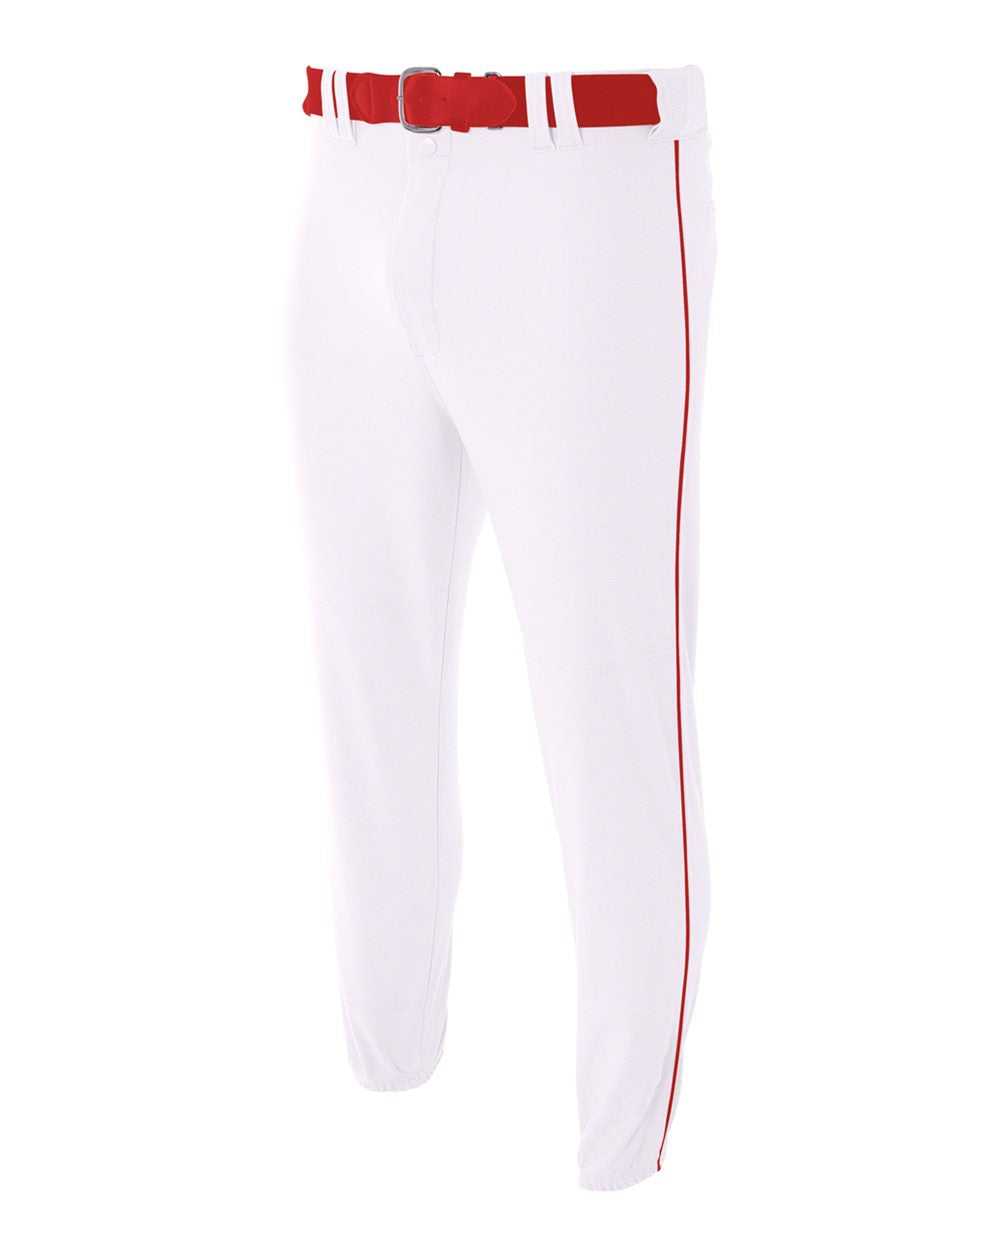 A4 N6178 Pro Style Elastic Bottom Baseball Pant - White Scarlet - HIT a Double